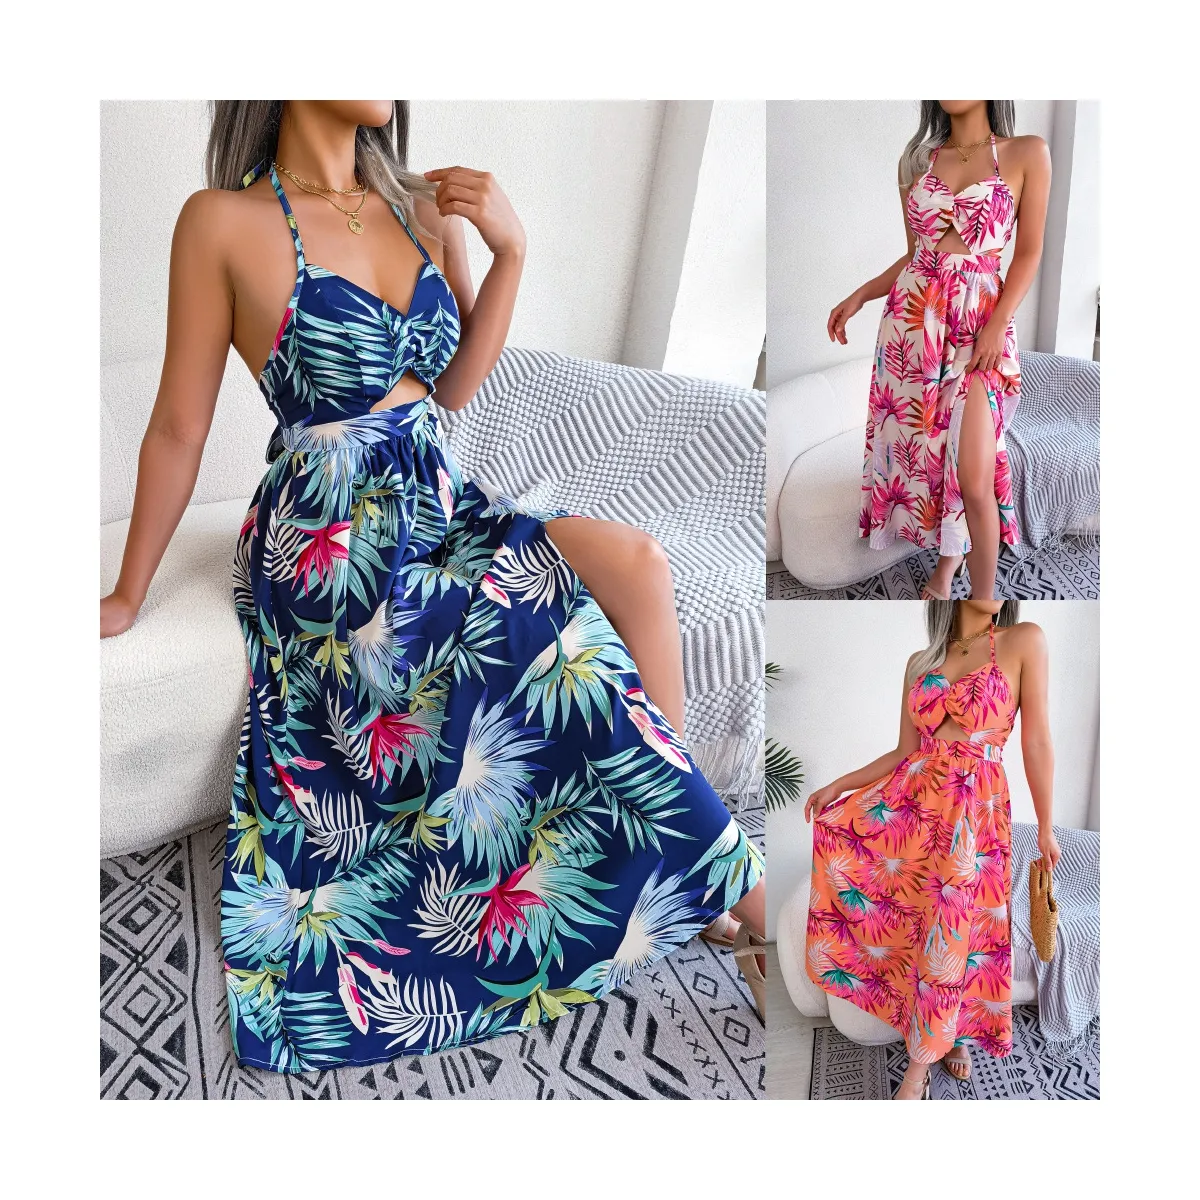 Gaun pantai Bohemian wanita, gaun pantai musim panas motif bunga, Gaun kasual motif bunga Boho Vintage untuk wanita